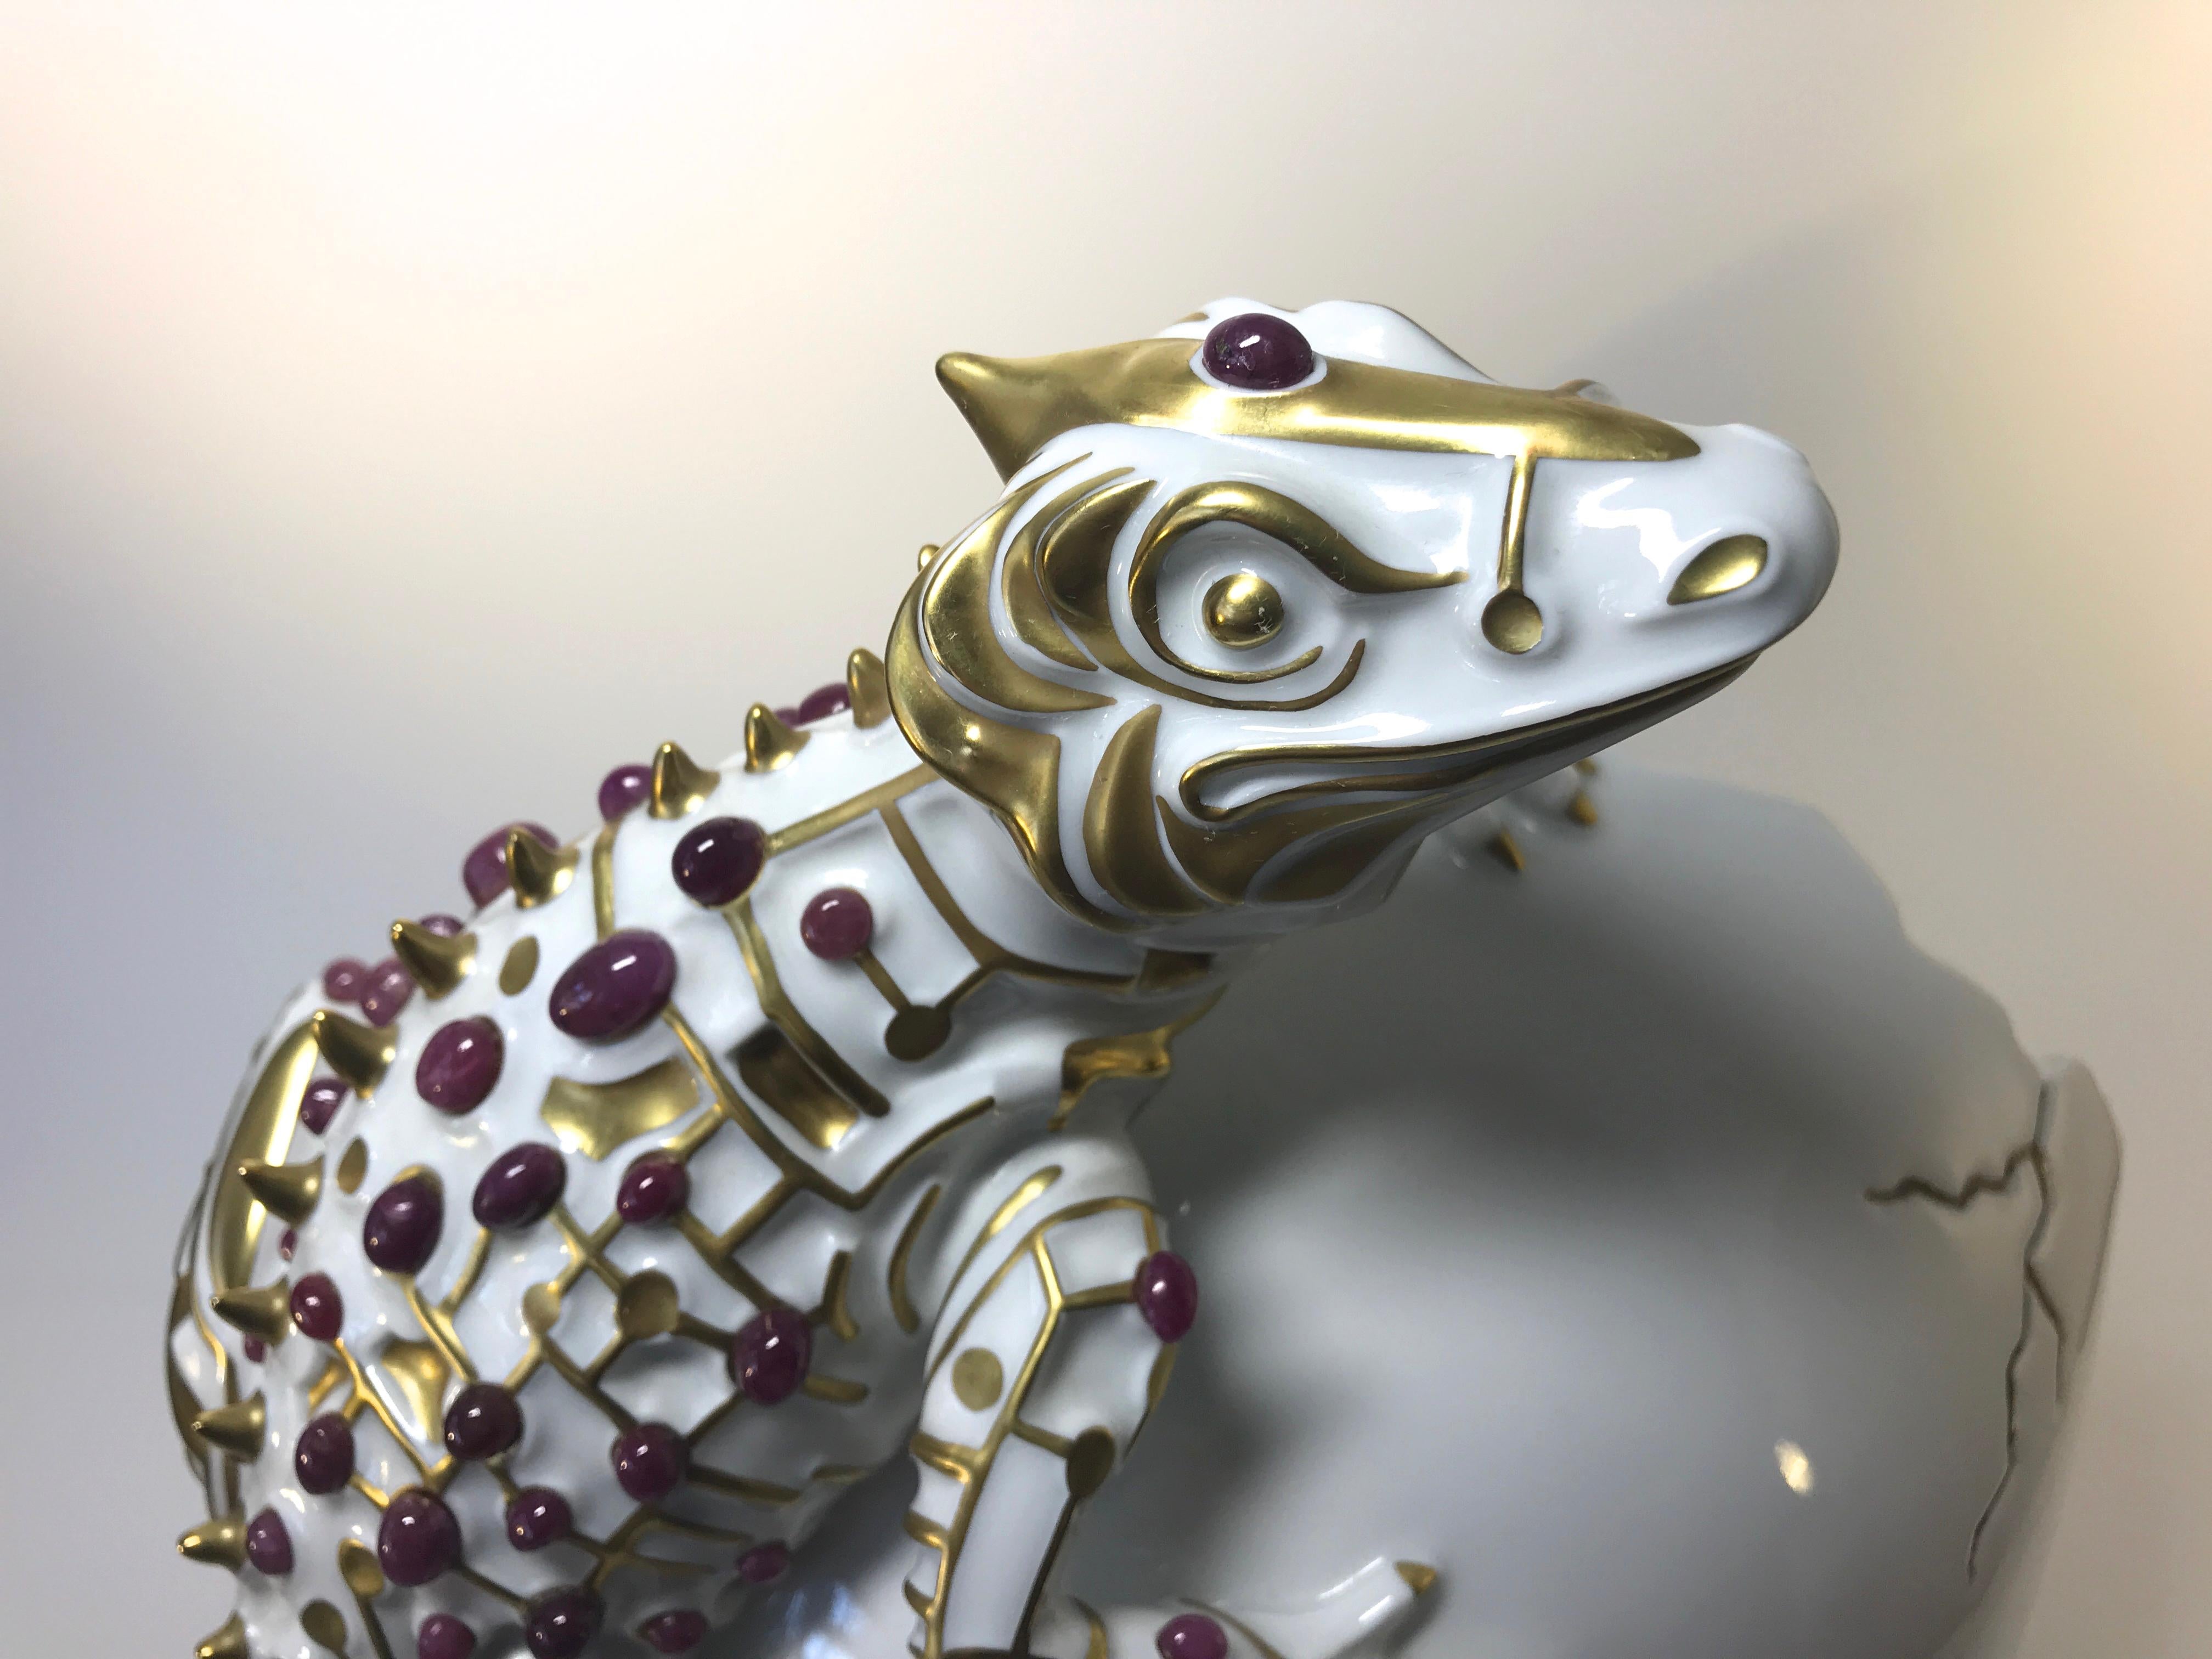 Hand-Crafted Rubies 24k Pure Gold, Porcelain Luxury Lizard Sculpture Egg Caviar Bowl 2000s